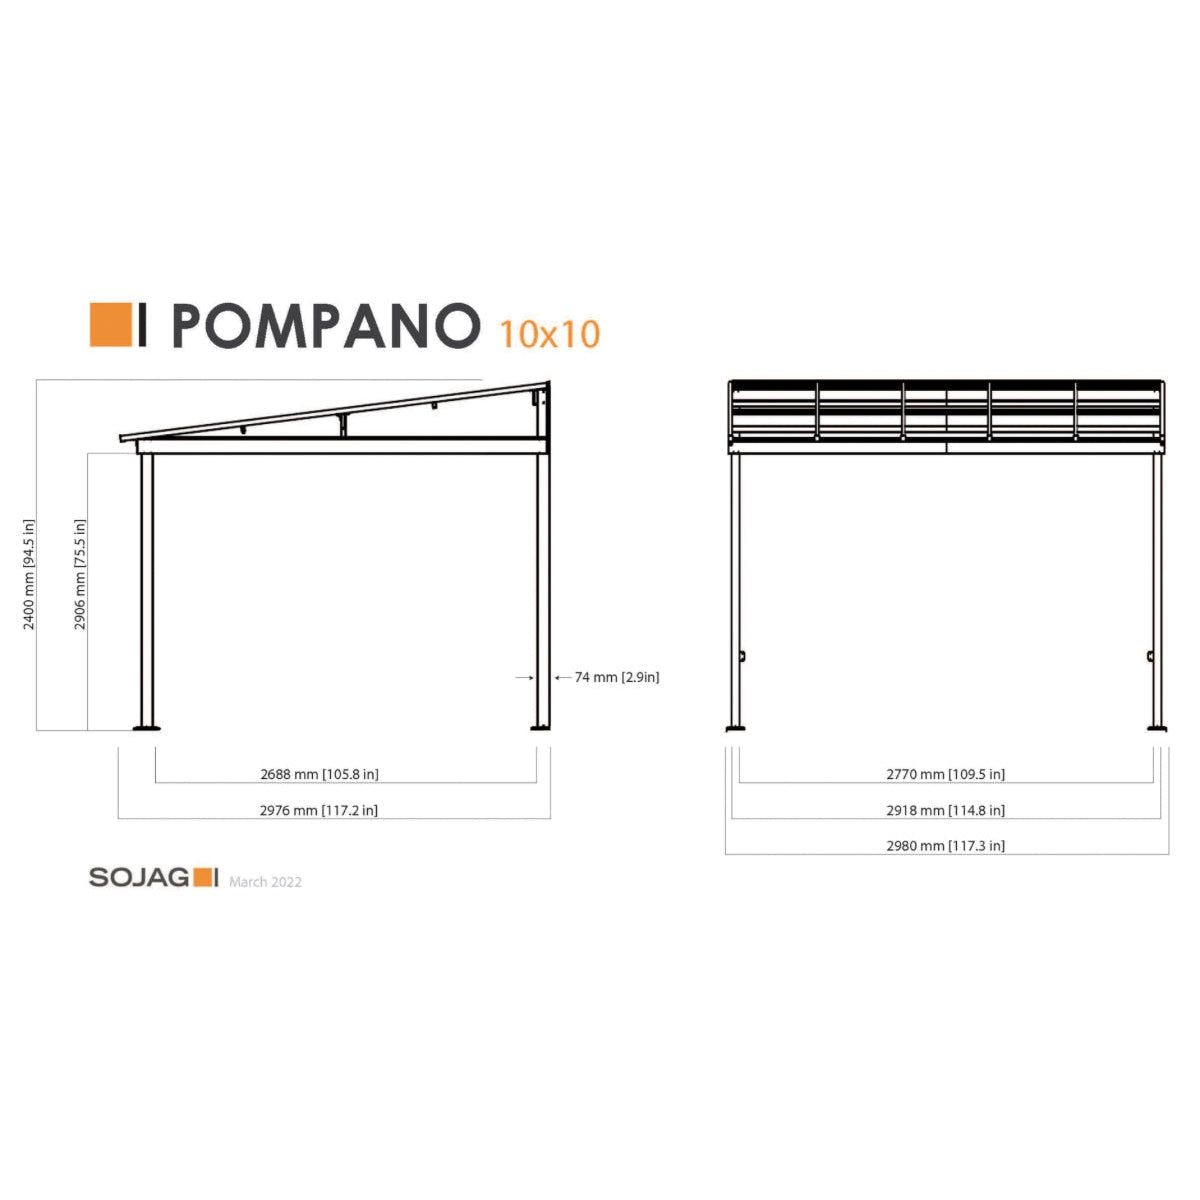 Pompano Aluminum Wall-Mounted Gazebo Patio Cover 10 x 10 ft | Sojag-Delightful Yard